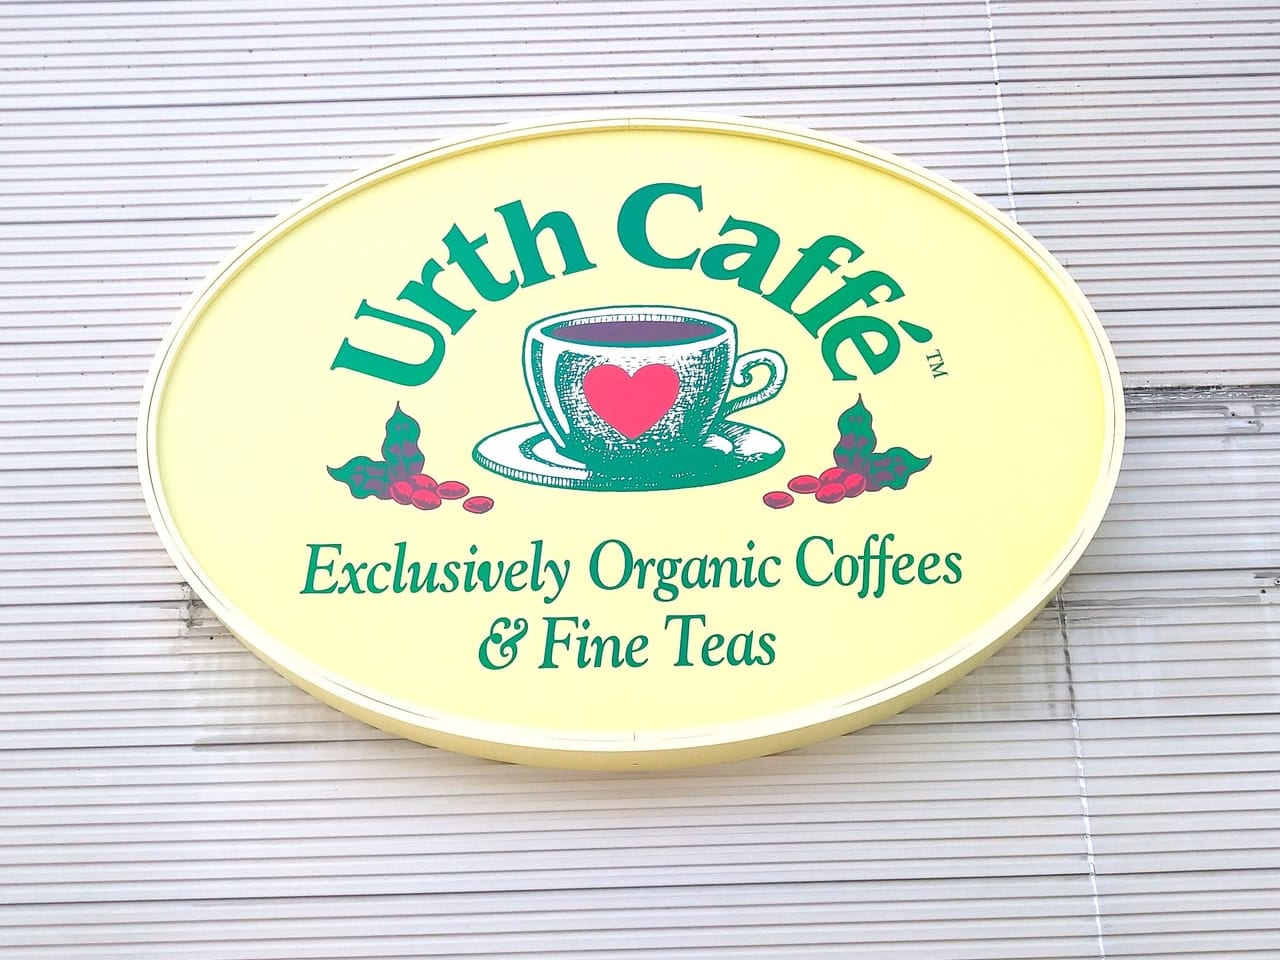 urthcaffe